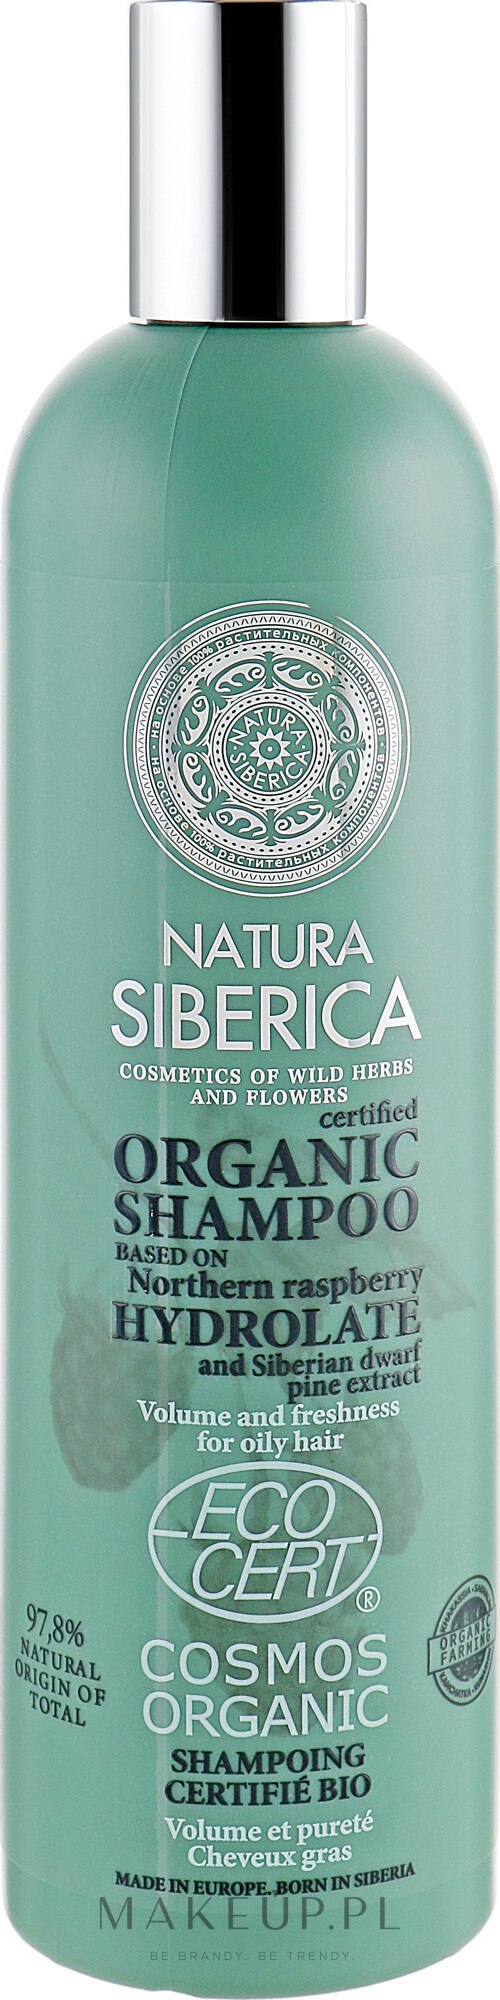 opinie szampon natura siberica